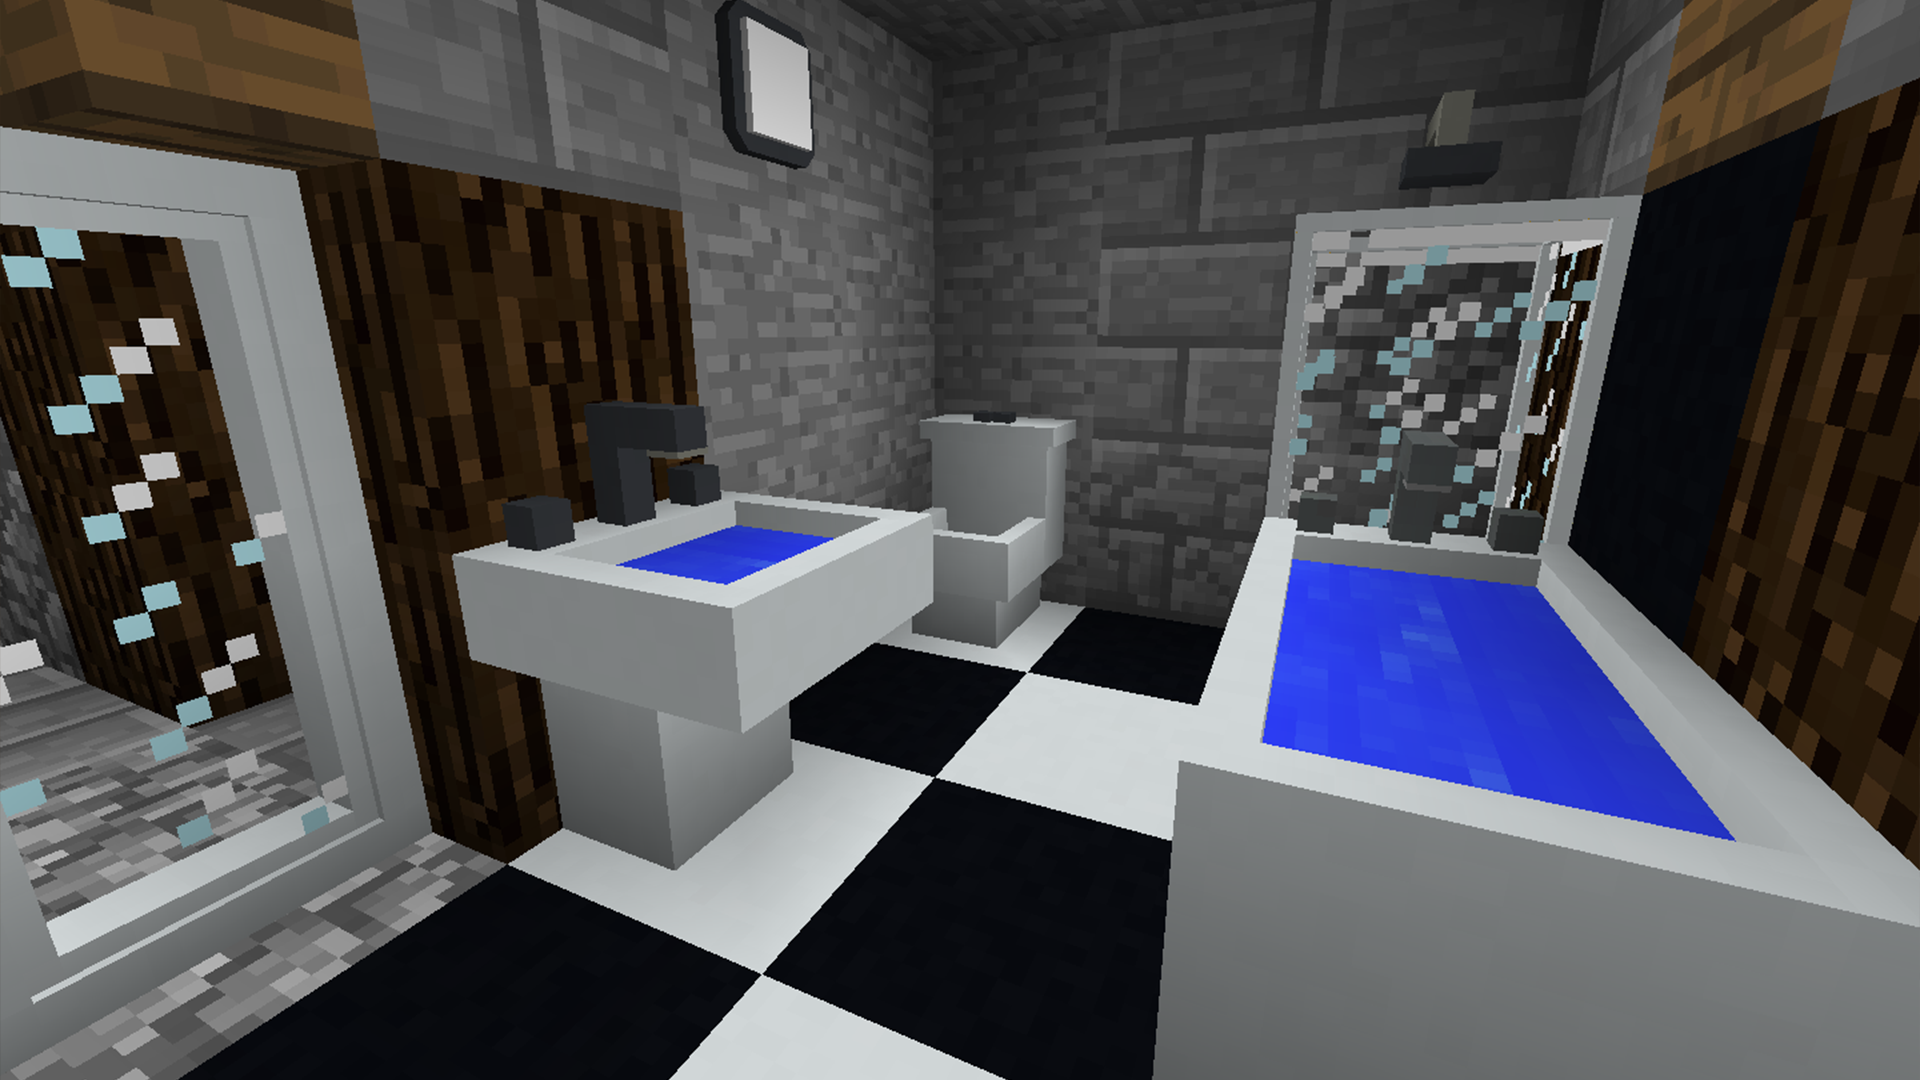 Мод на майнкрафт скибиди туалеты v 19.1. Minecraft 1.12.2 Mod мебель. Мод на мебель в майнкрафт 1.12.2. Мебель для МАЙНКРАФТА 1.16.5. Mr Crayfish Furniture Mod 1.12.2 кран.